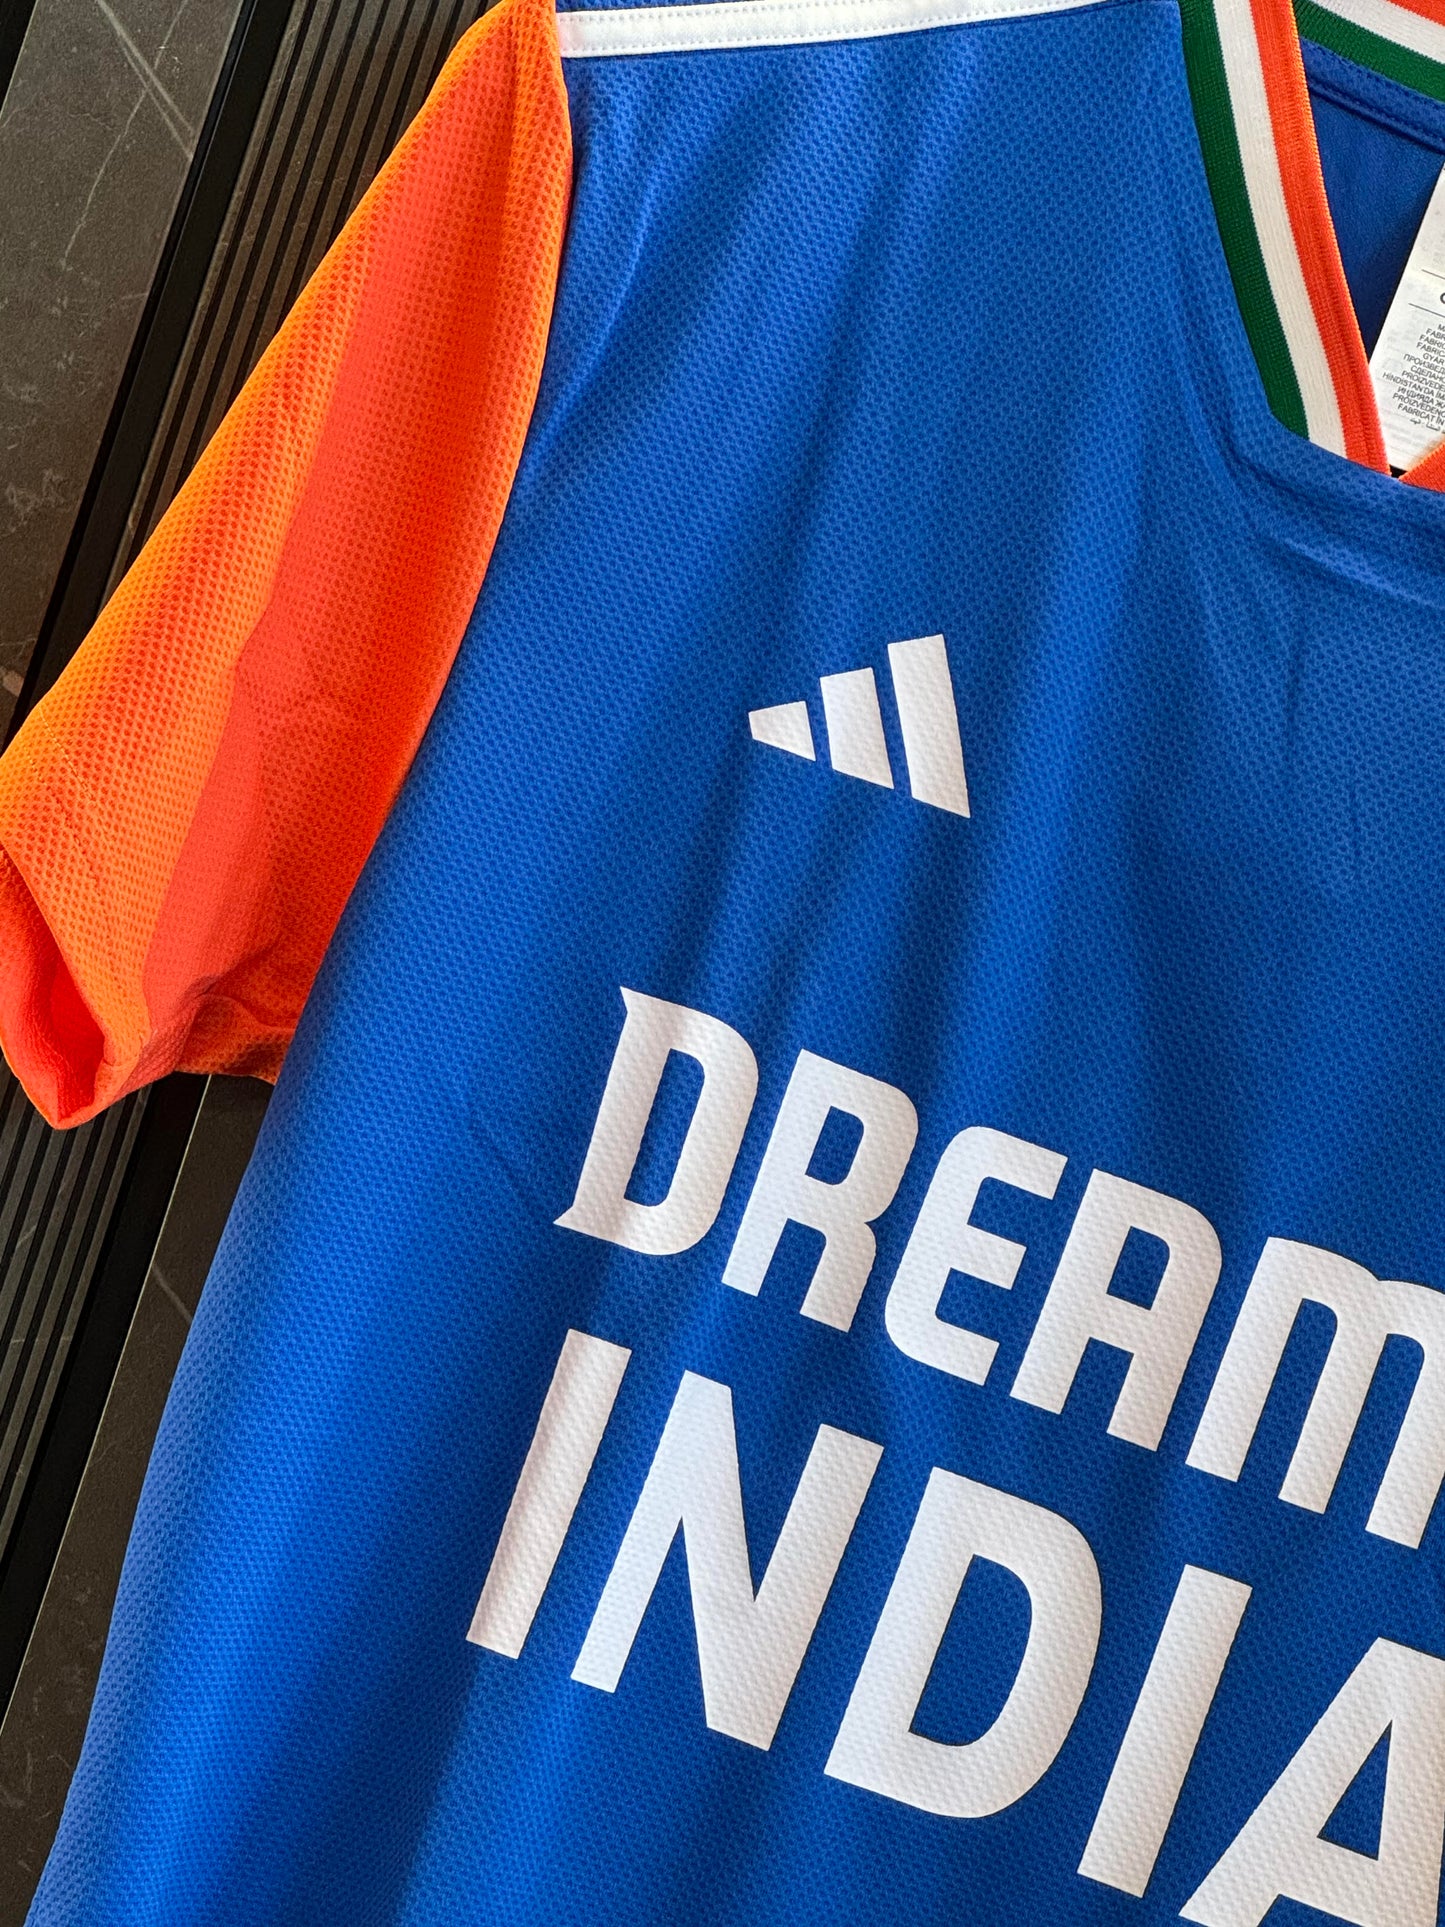 Adidas Team India Fan Jersey